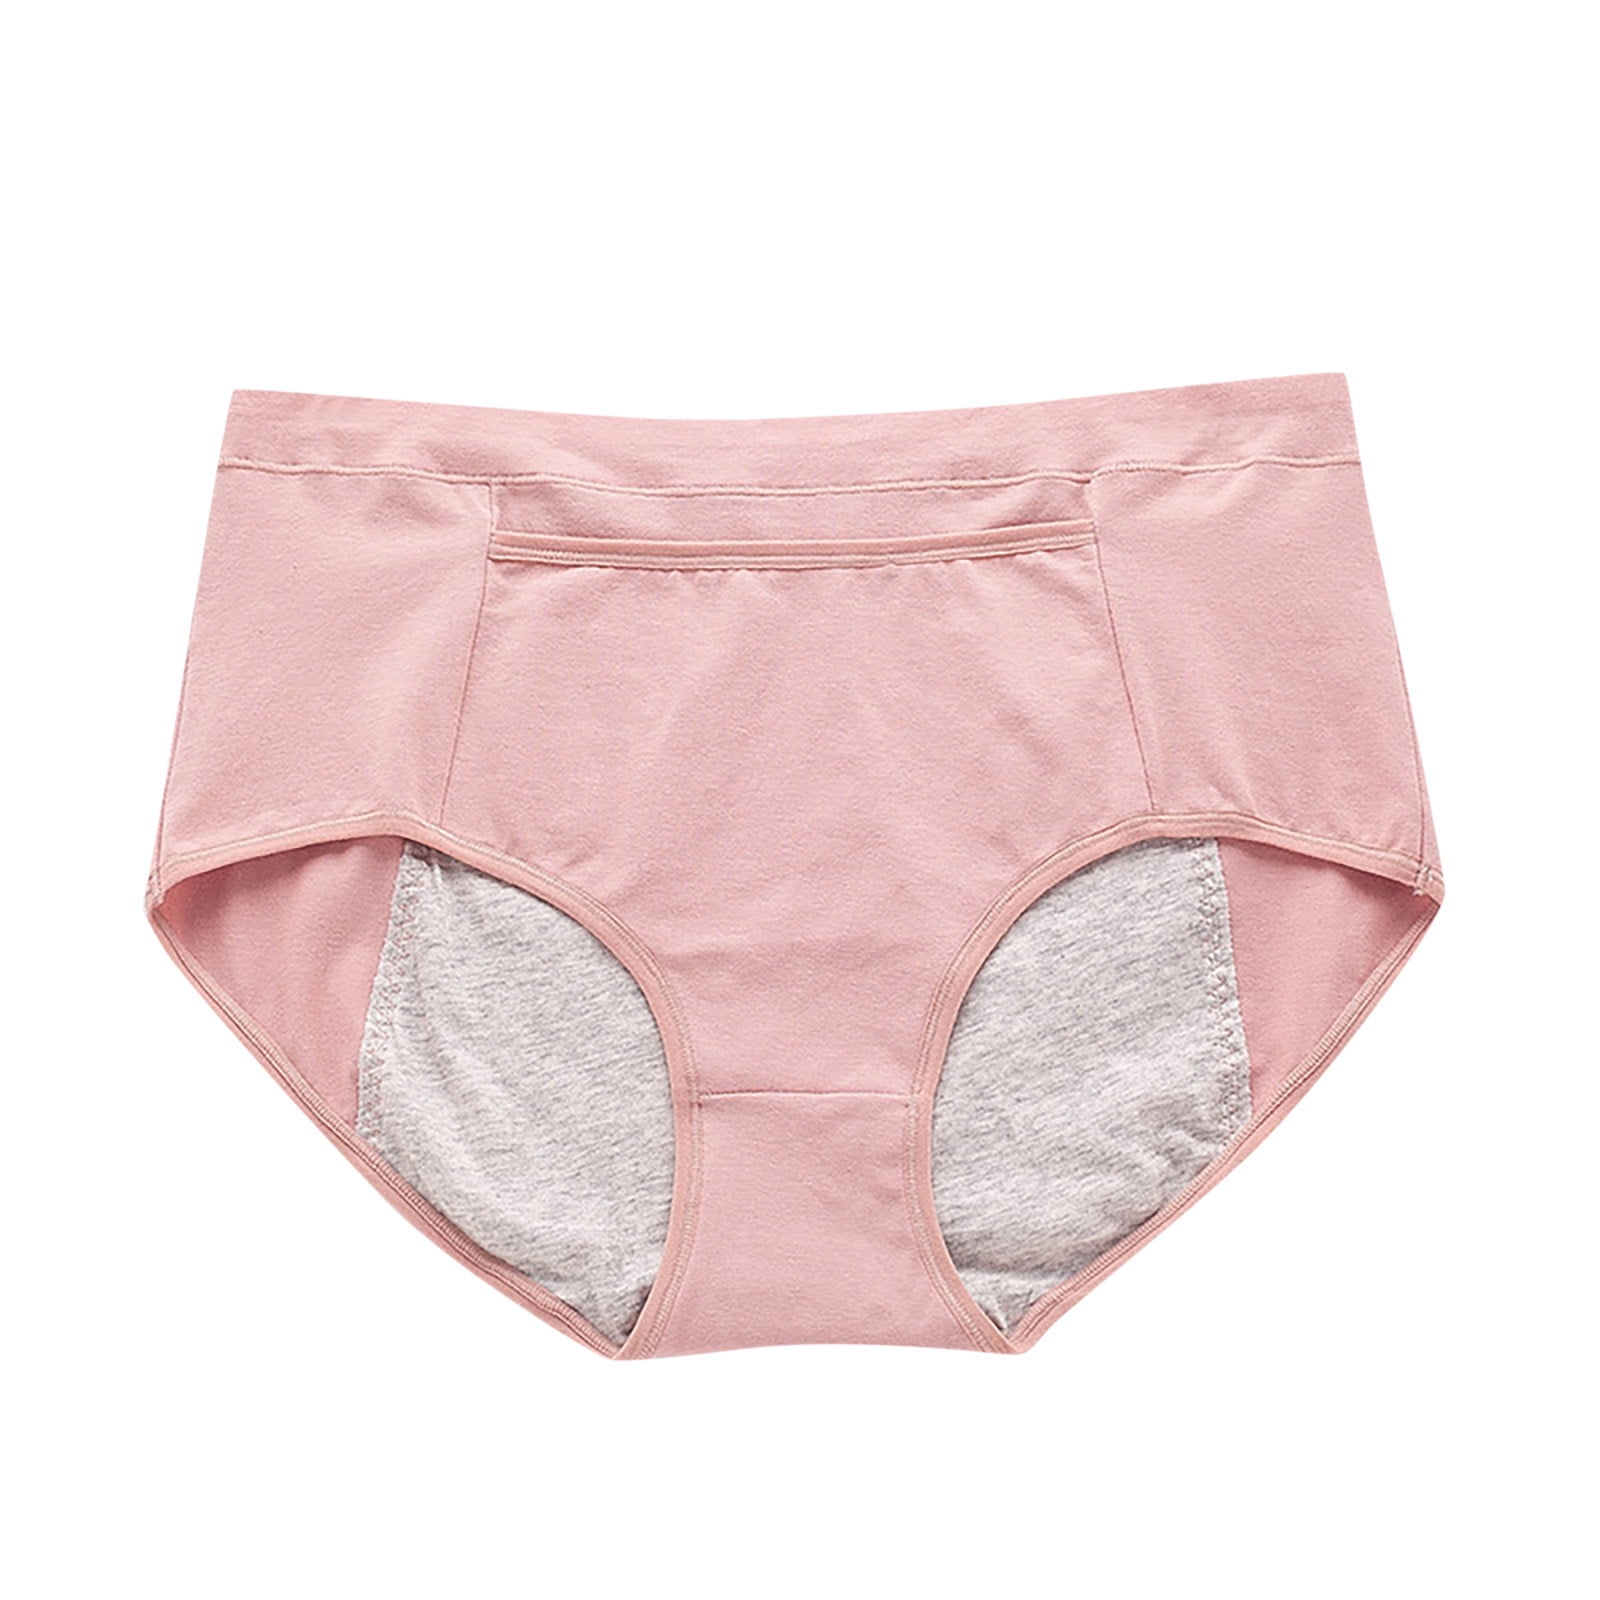 ESHOO 8-16T Teen Girls Cotton Underwear Hipster Briefs Undies Period Panties  for Teenager Big Girls Pack of 6 